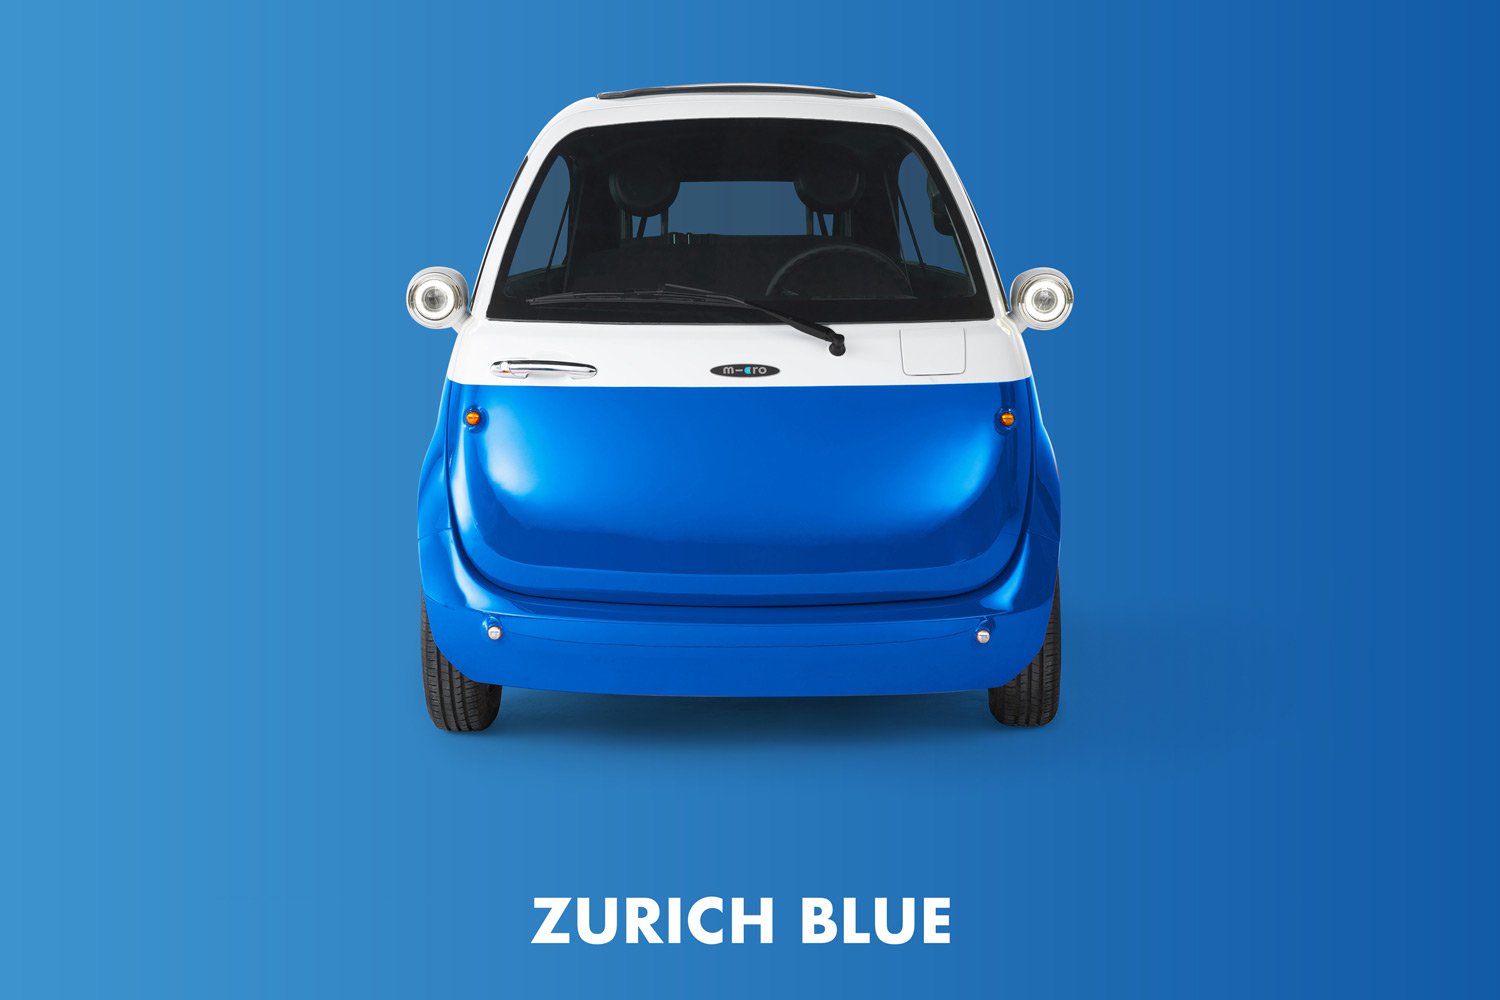 microlino world's smallest electric car 1